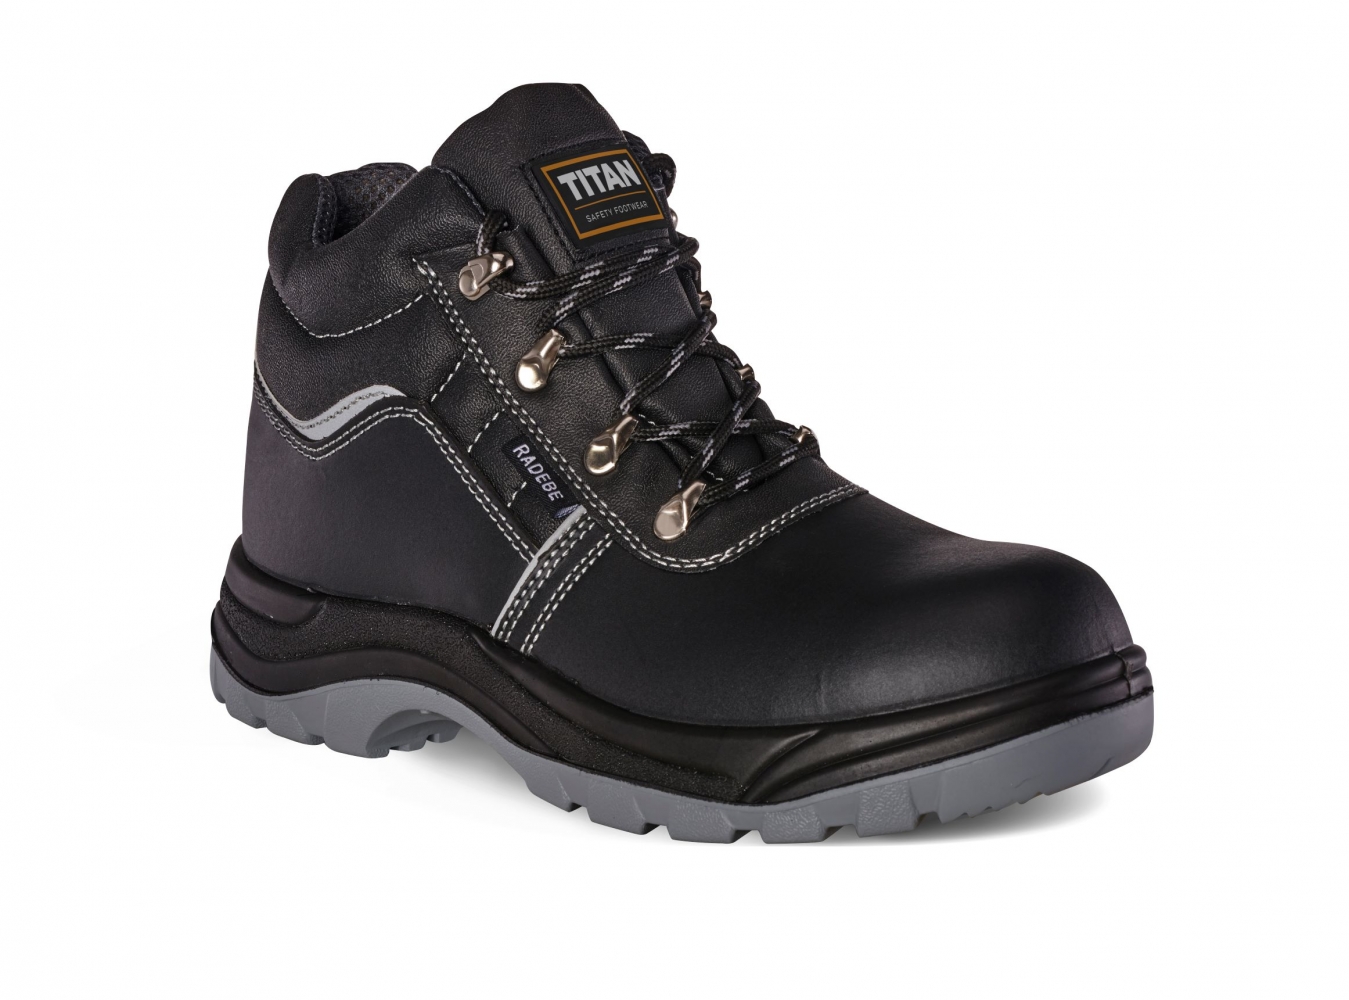 Titan Safety Footwear thumb Titan Radebe Safety Boot - Black - Global ...